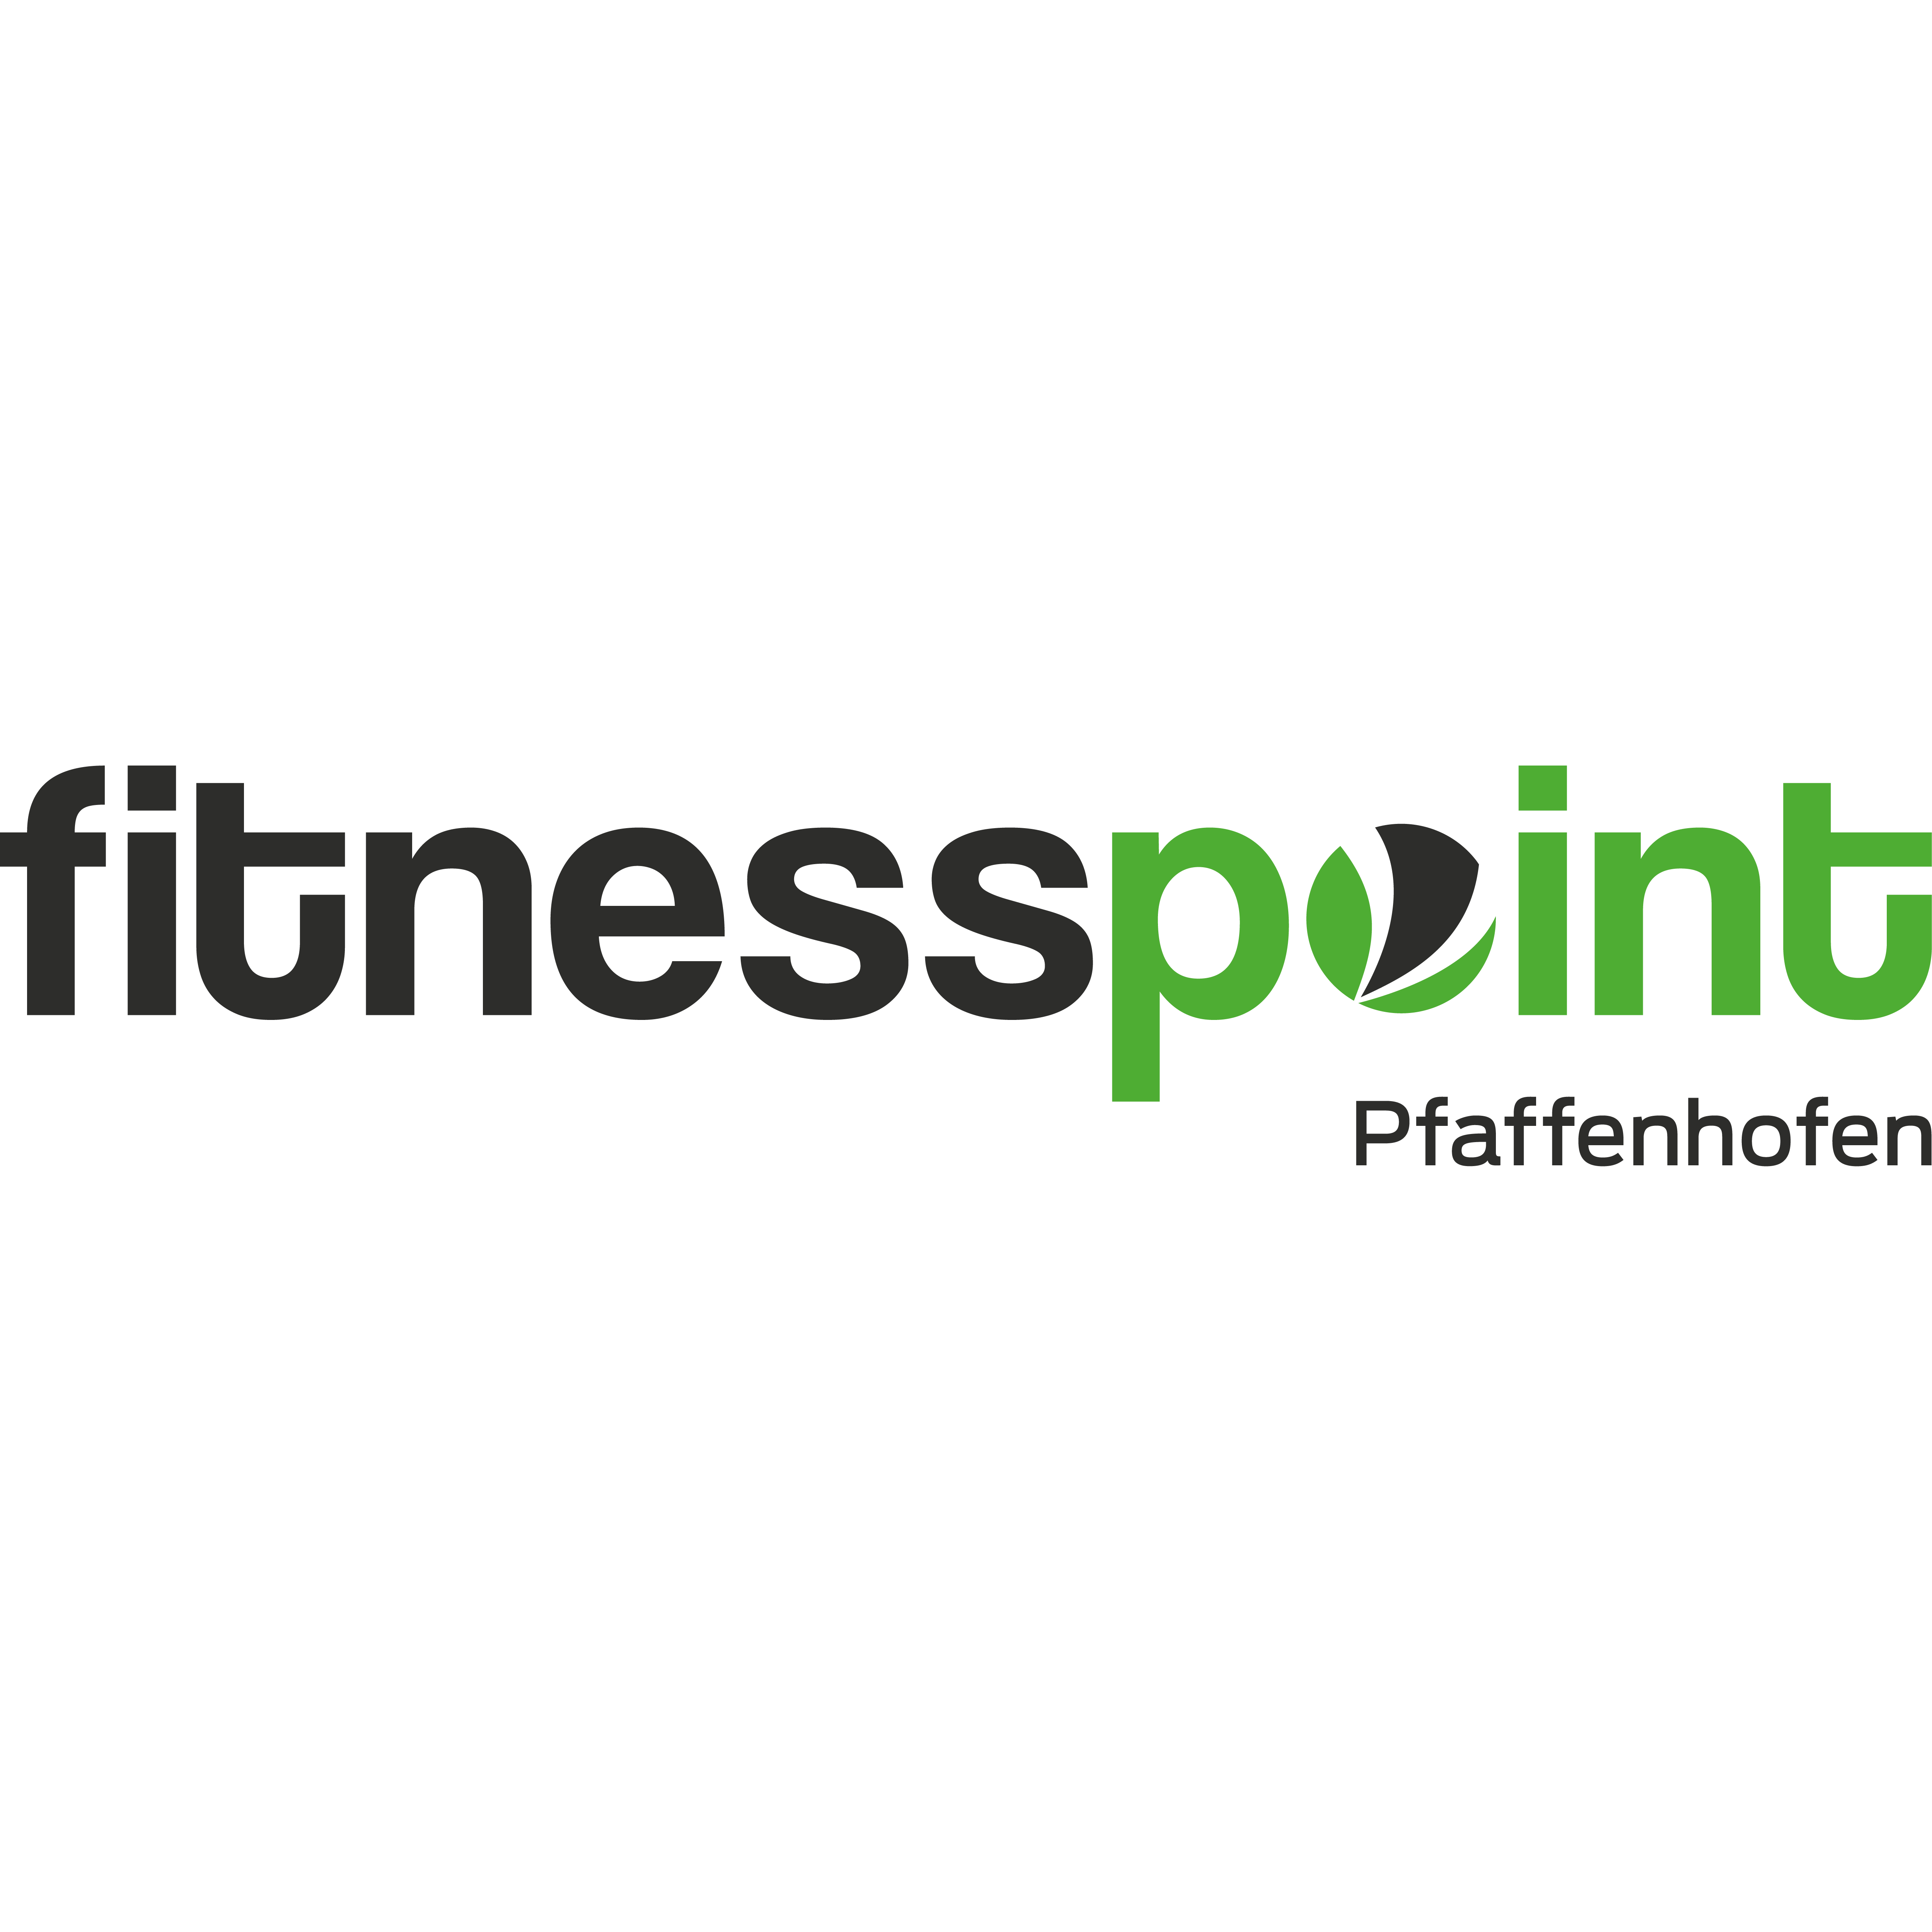 Fitnesspoint Pfaffenhofen Logo